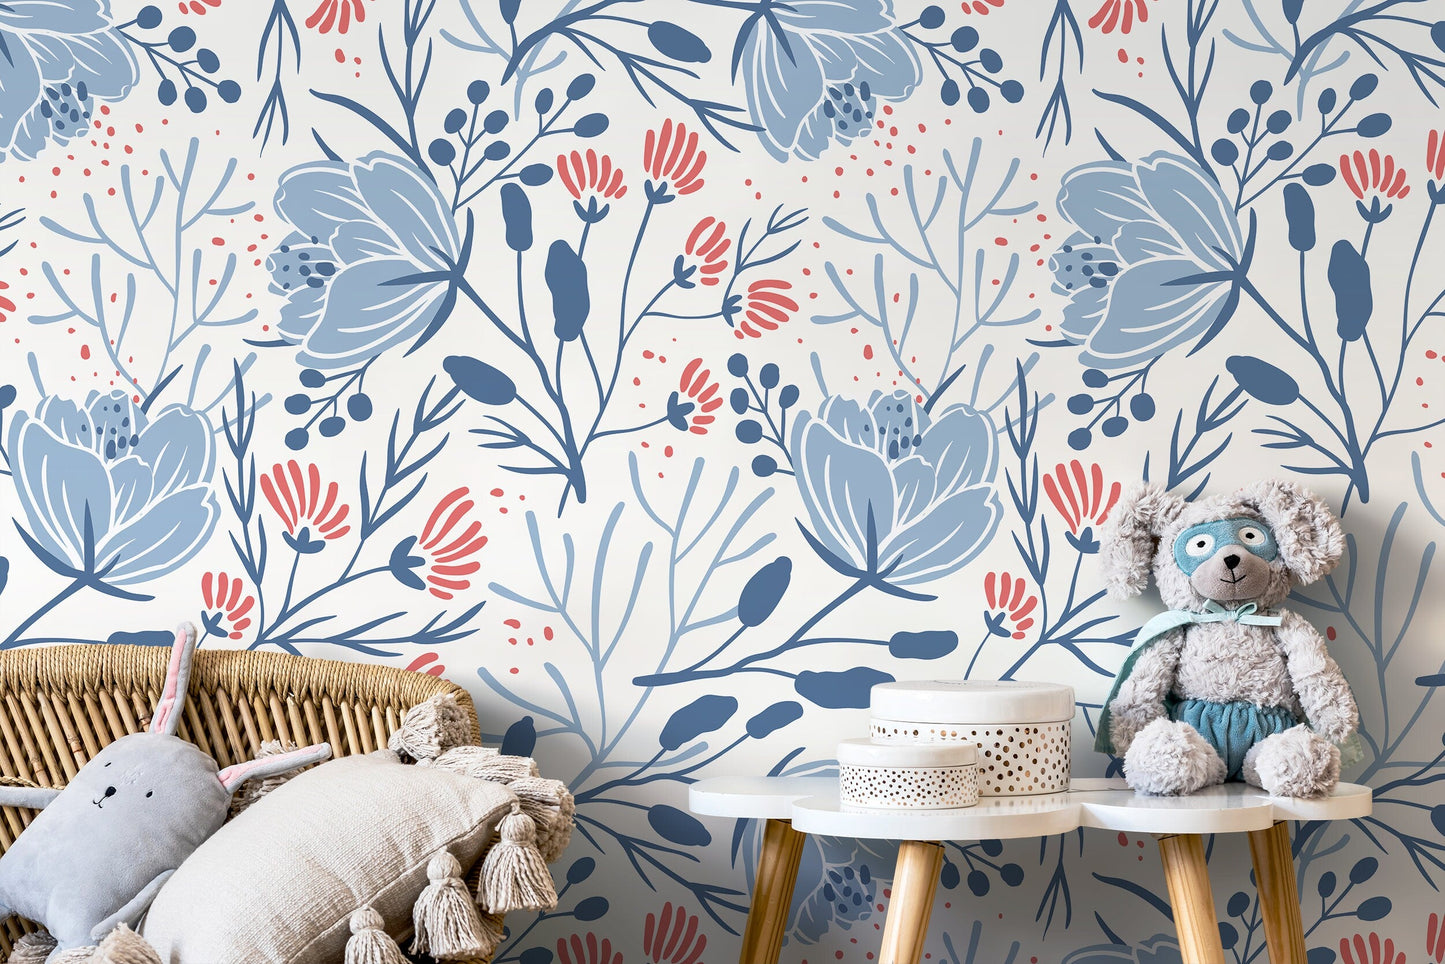 Blue Floral Scandinavian Wallpaper / Peel and Stick Wallpaper Removable Wallpaper Home Decor Wall Art Wall Decor Room Decor - D151